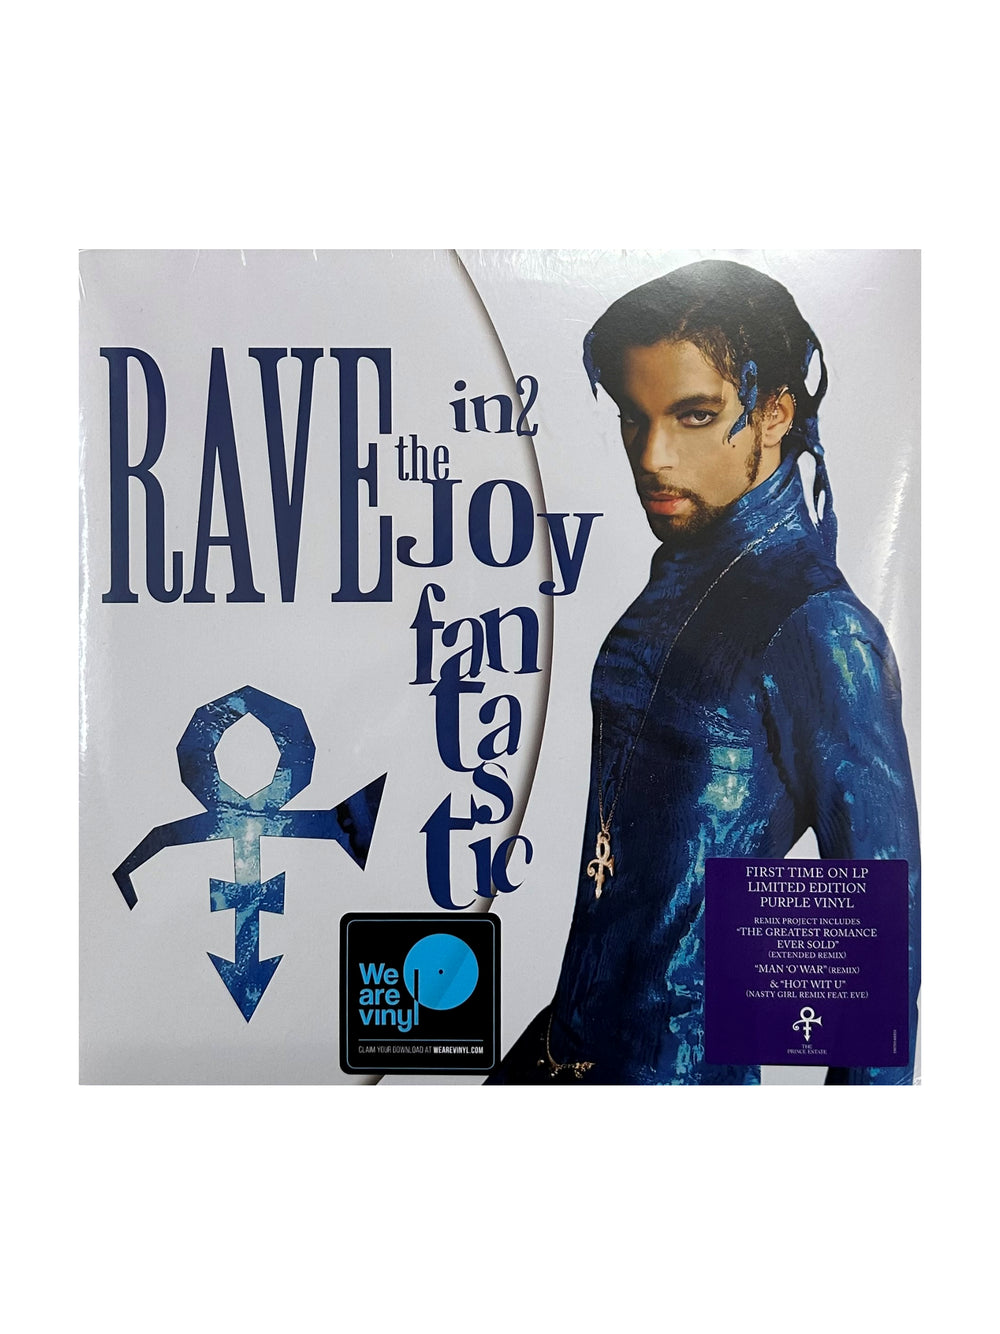 Prince – 0(+> Rave In2 The Joy Fantastic 2 x LP Vinyl Reissue Purple Sony Legacy Release NEW 2019